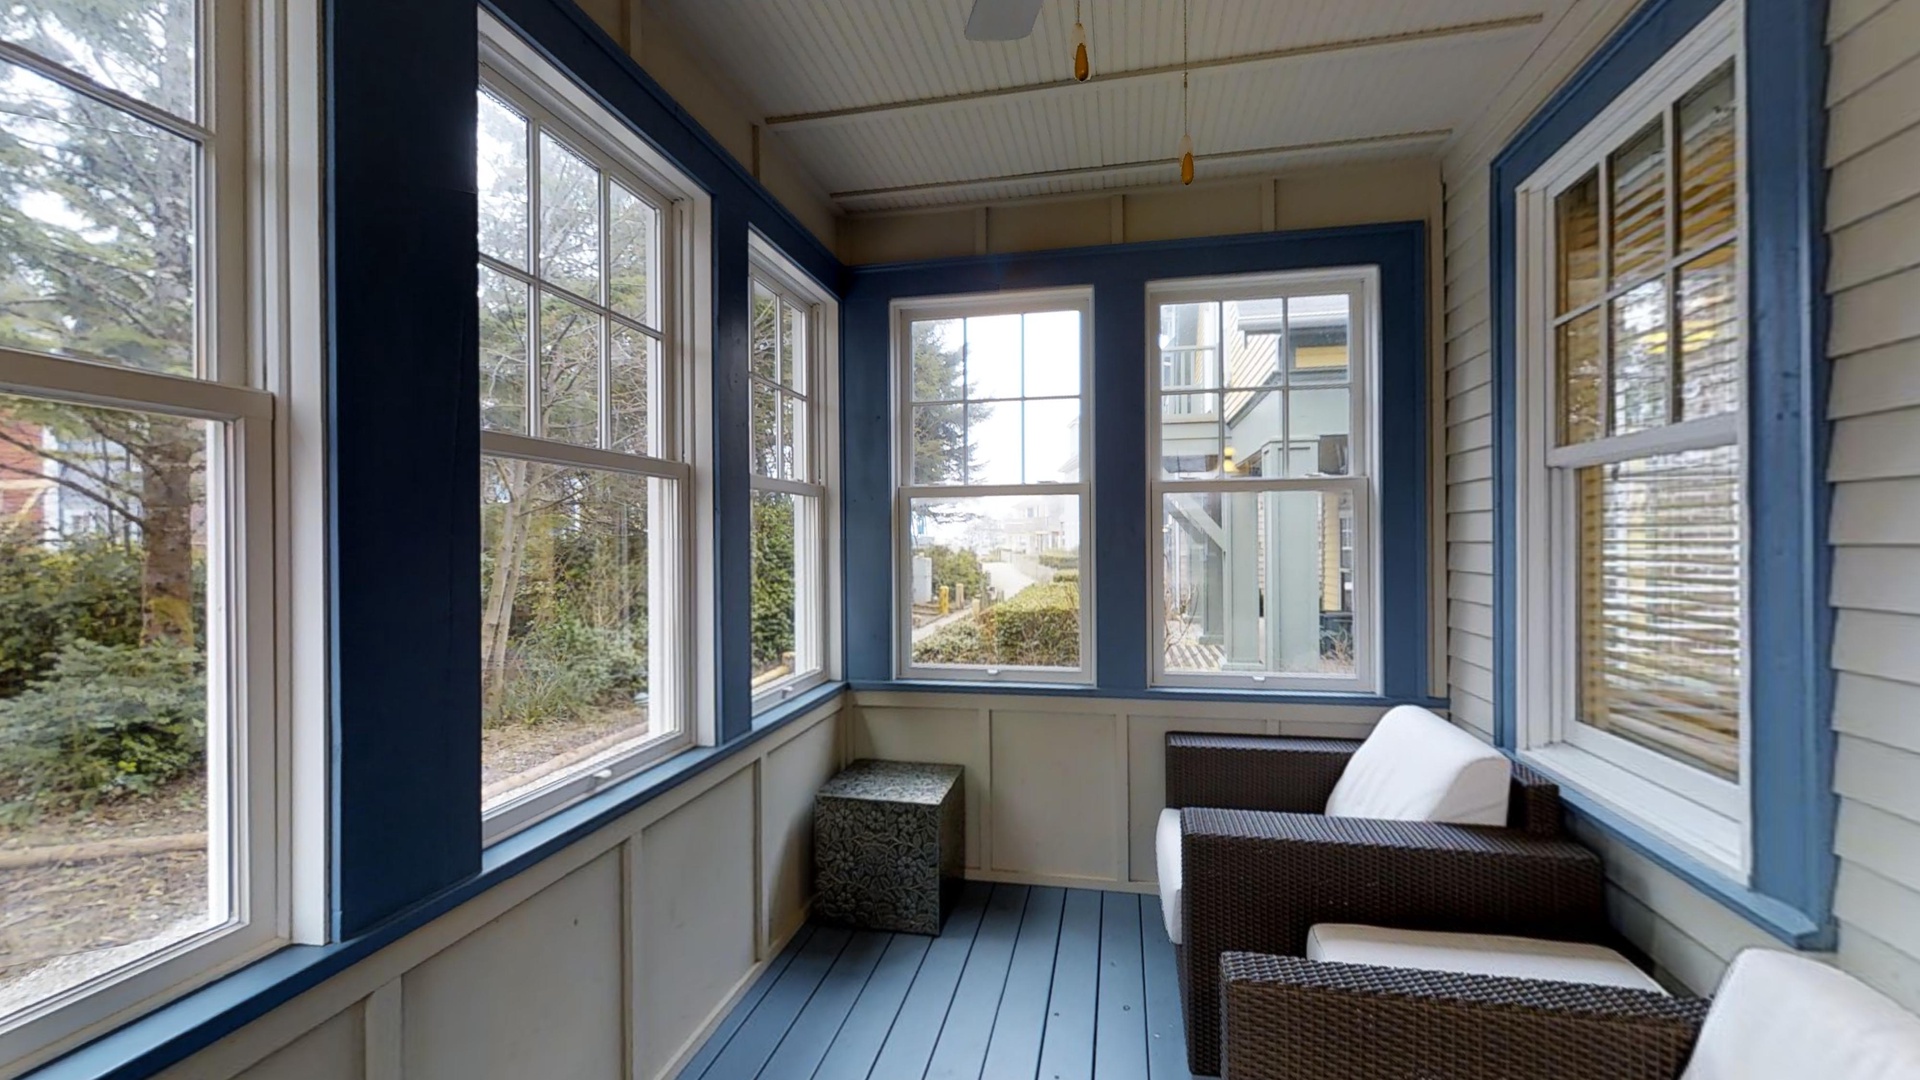 Enclosed porch seating